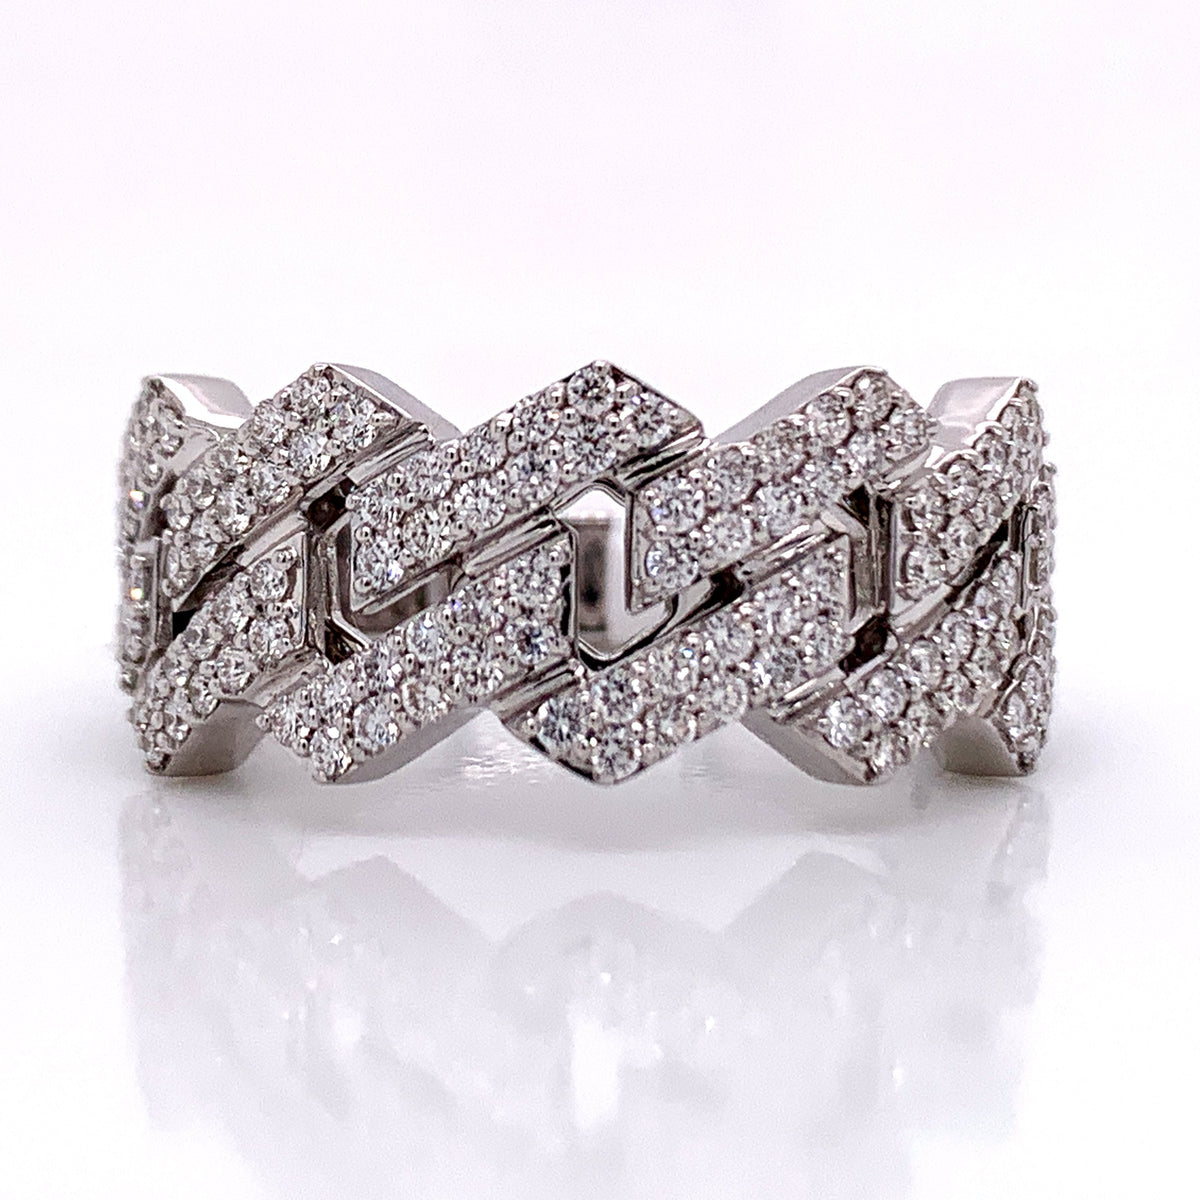 1.50 CT. Diamond Ring in 14K White Gold - White Carat Diamonds 